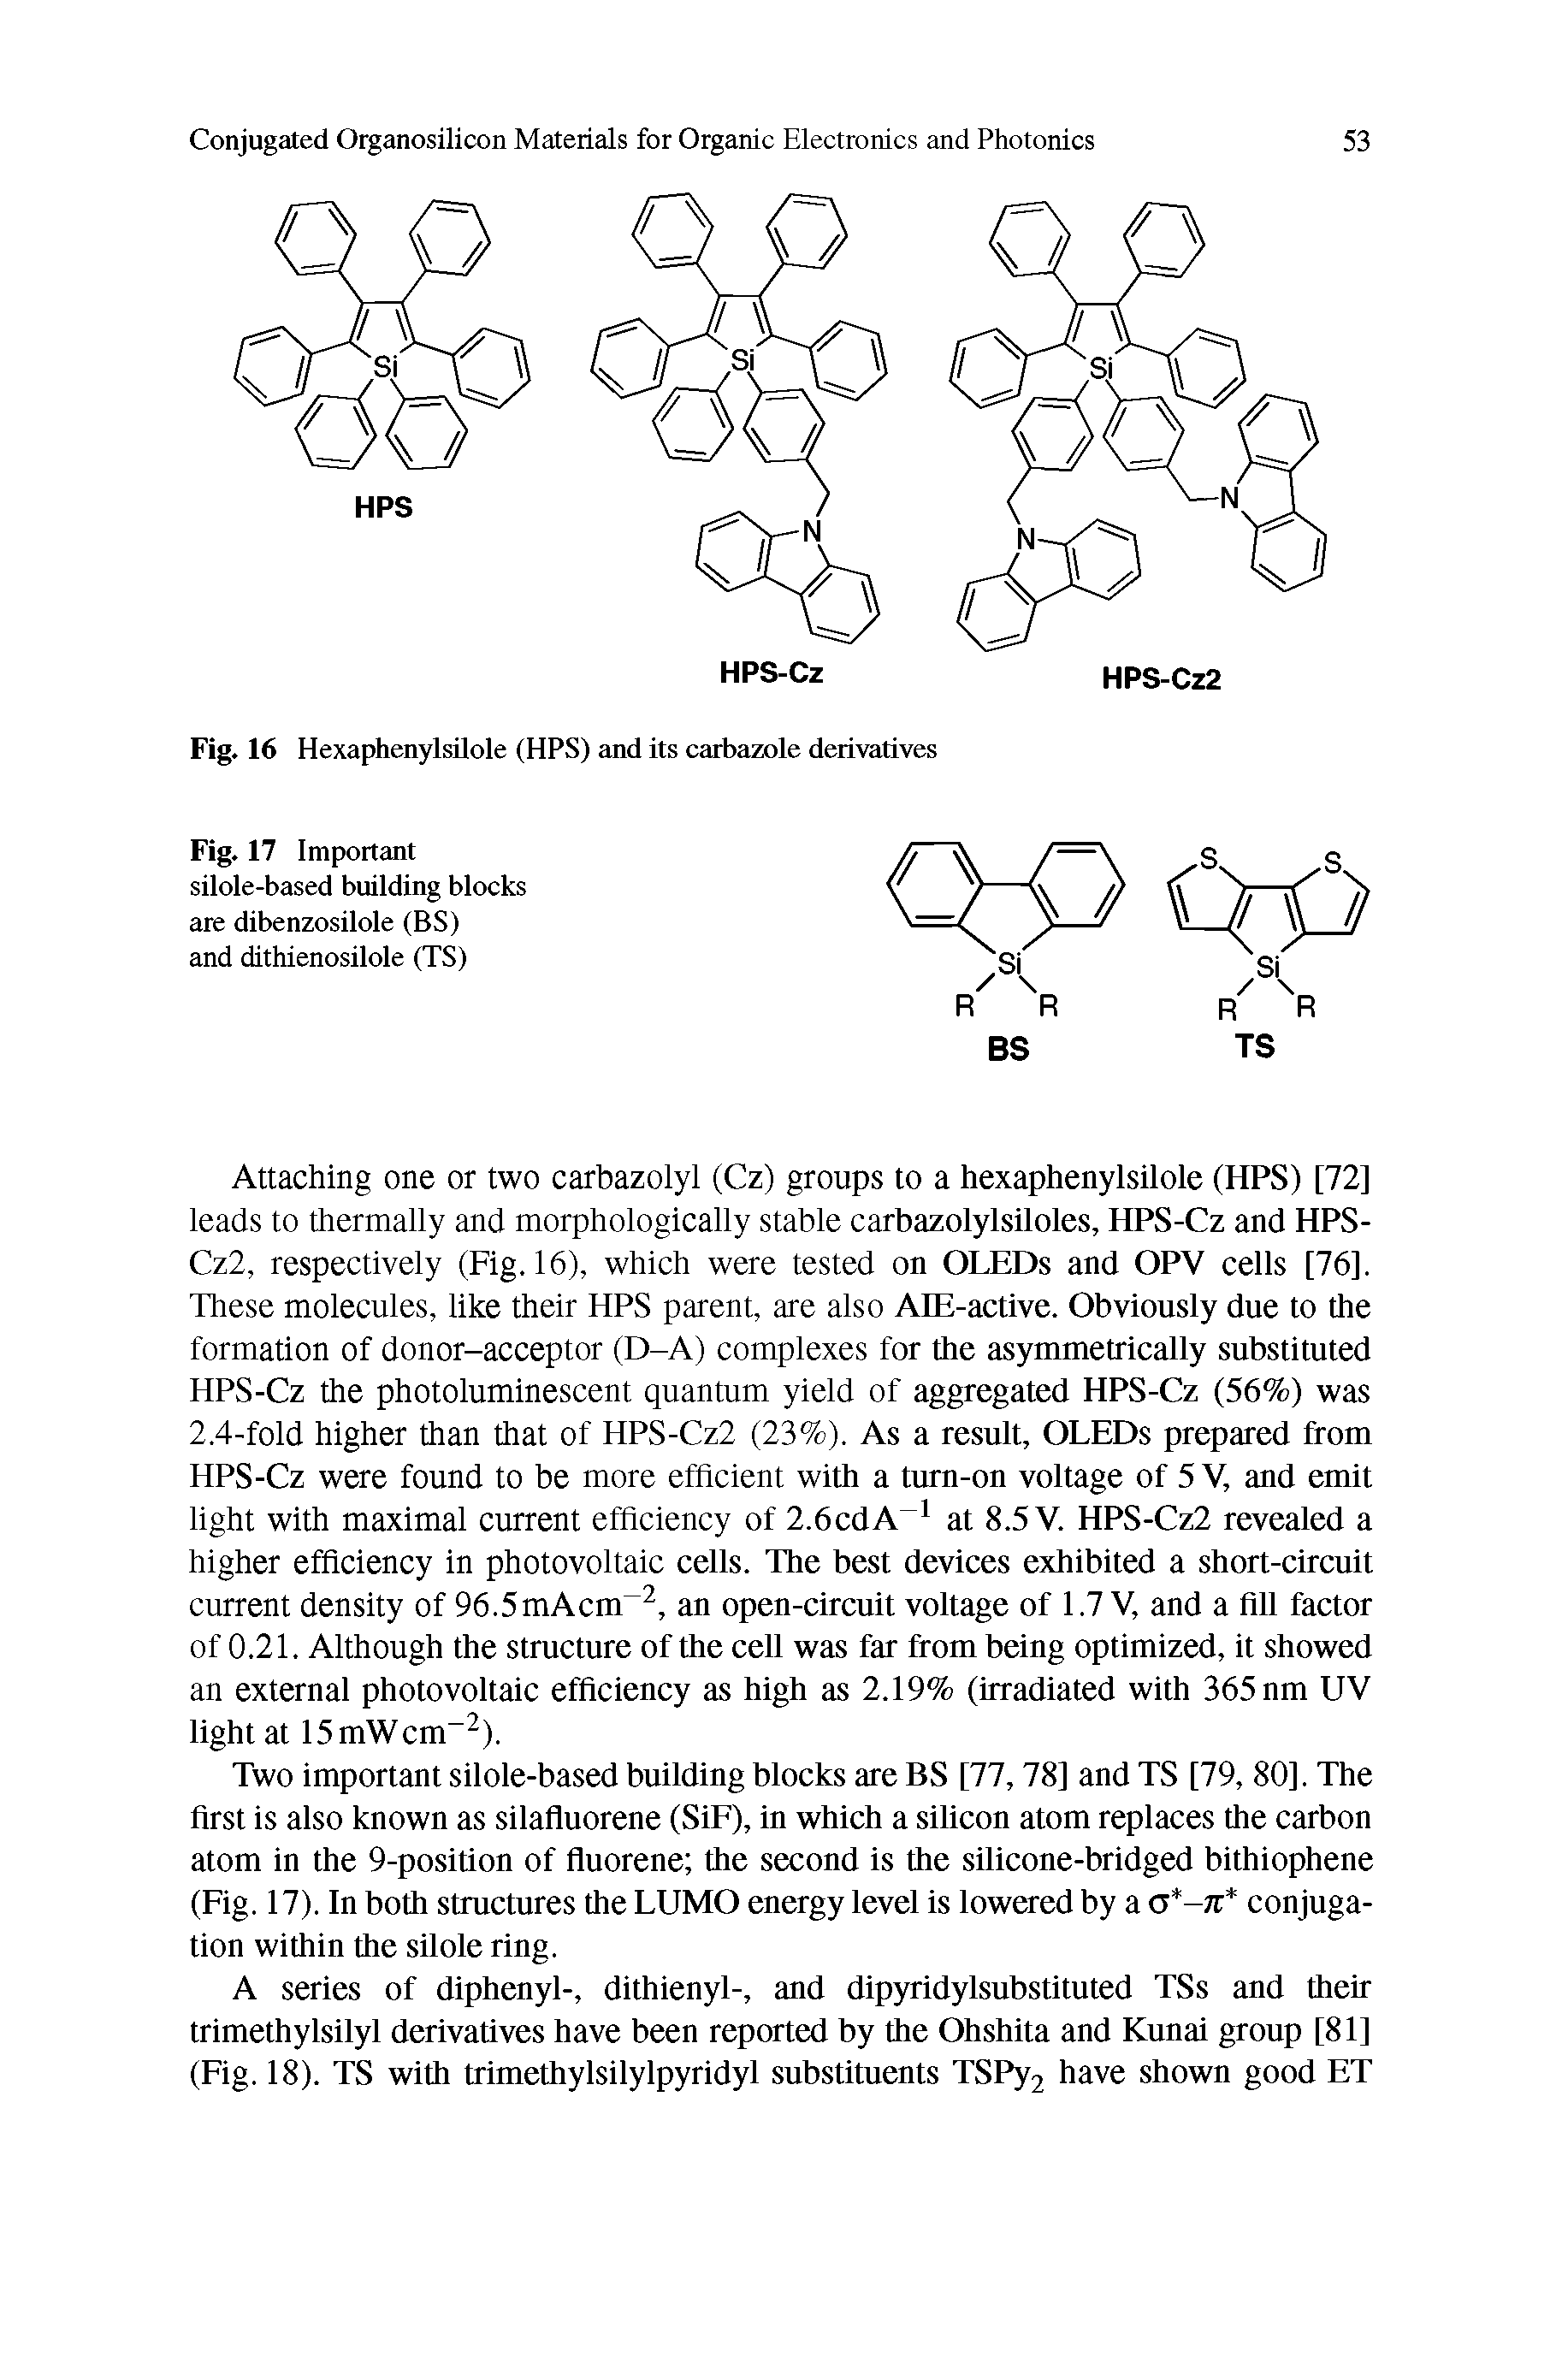 Fig. 17 Important silole-based building blocks are dibenzosilole (BS) and dithienosilole (TS)...